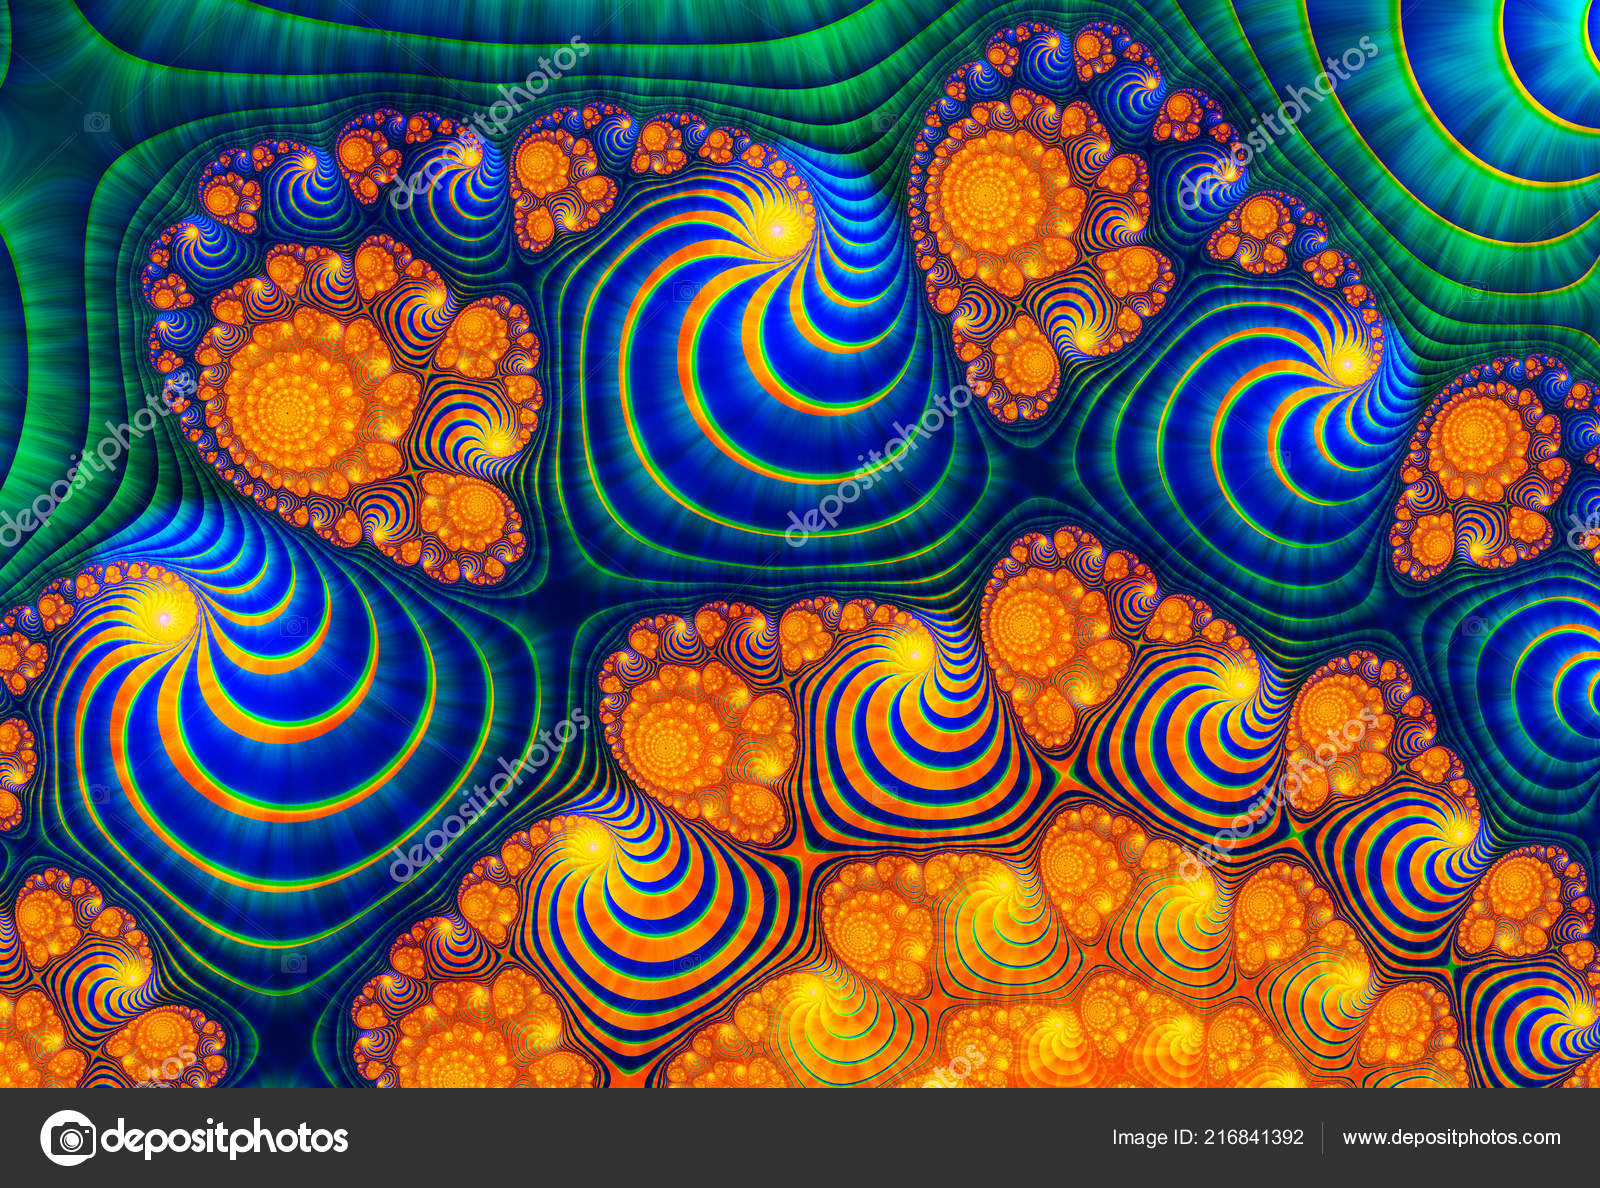 Abstract Patterns Nature Jewels Seashells Fractal Stock Photo by ©Viktar_Chaika 216841392